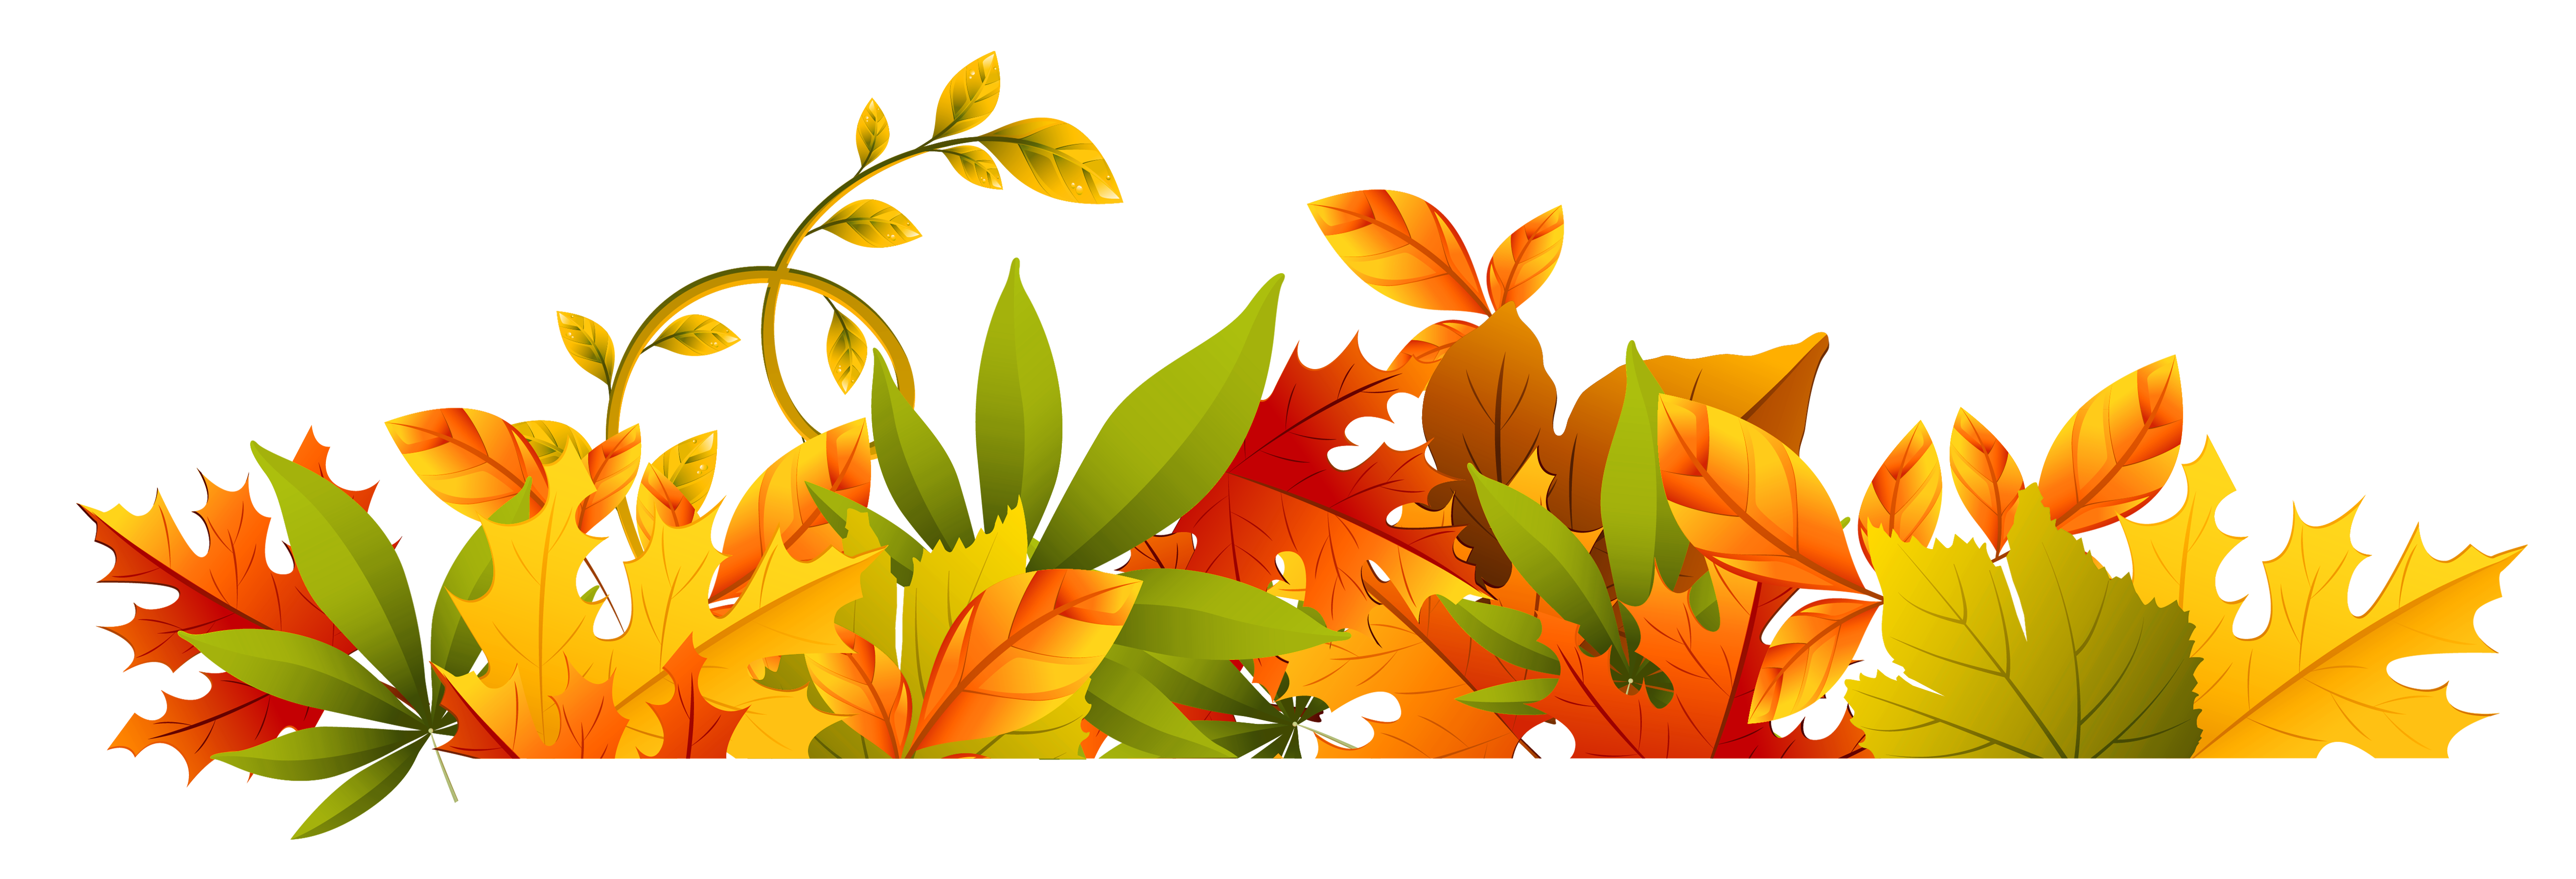 Decorative autumn leaves clip